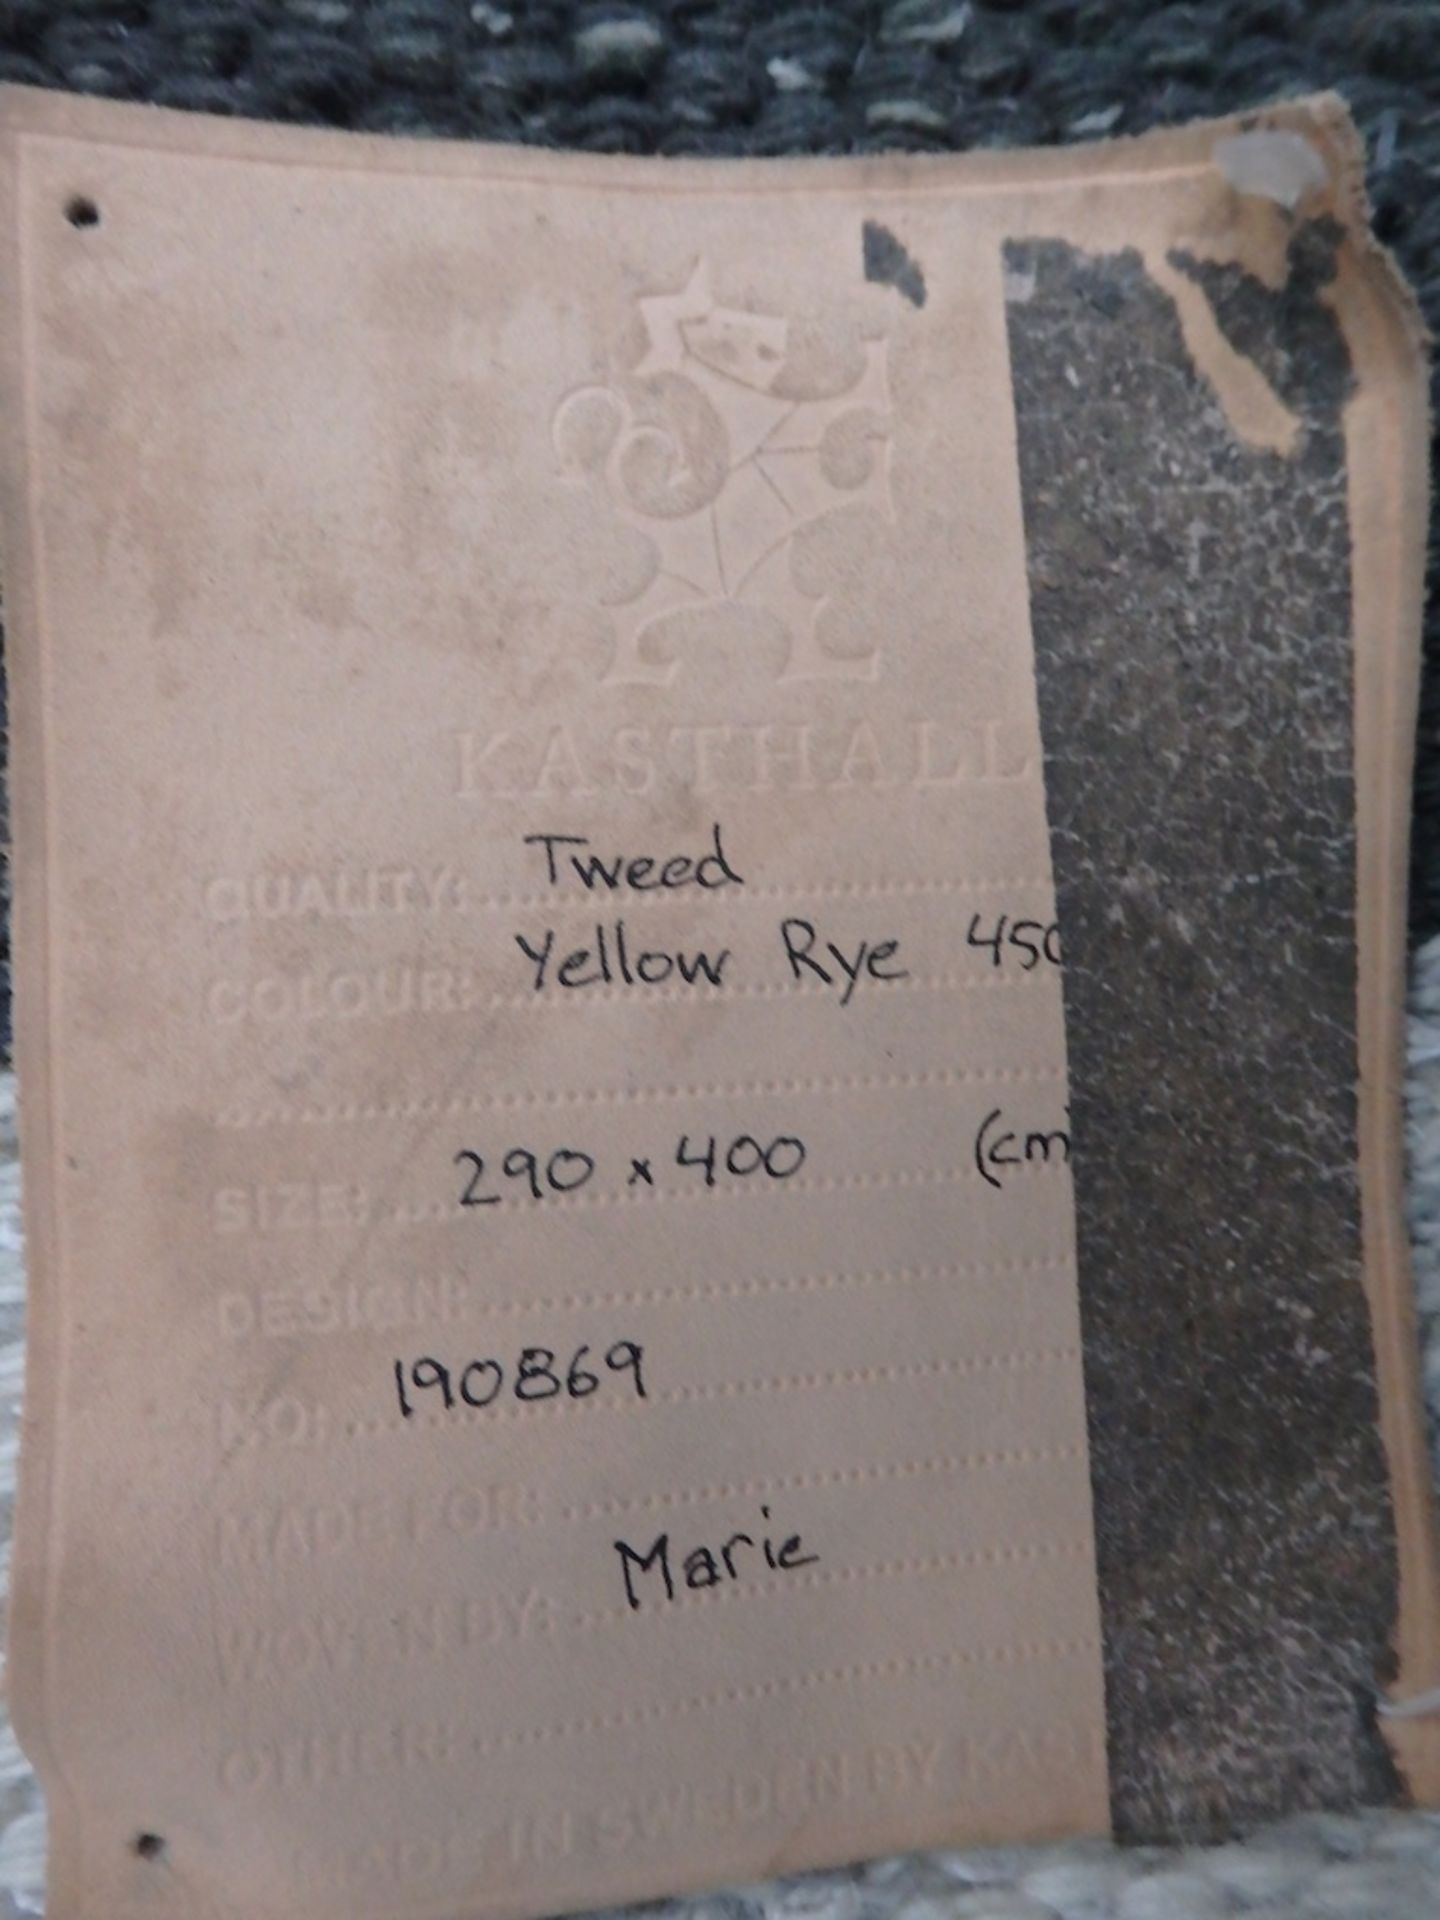 1 x Kasthall Tweed Yellow Rye Rug 400x290cm - CL087 - Location: Altrincham WA14 - RRP £800.00 - Image 5 of 7